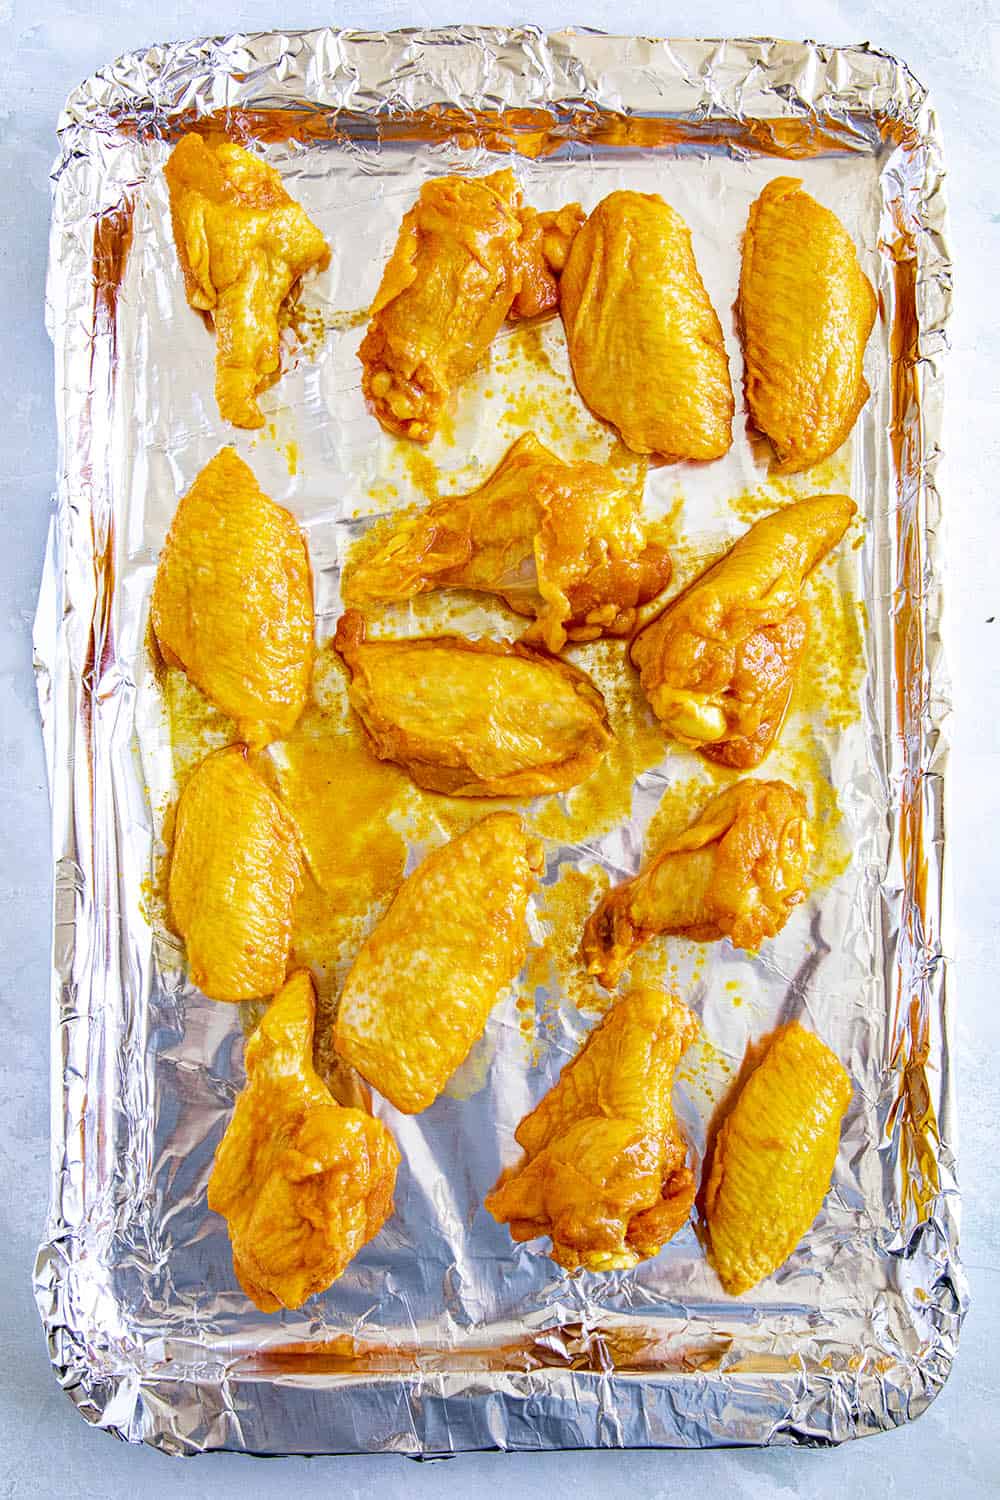 Seasoned chicken wings on a baking sheet, ready for the smoker